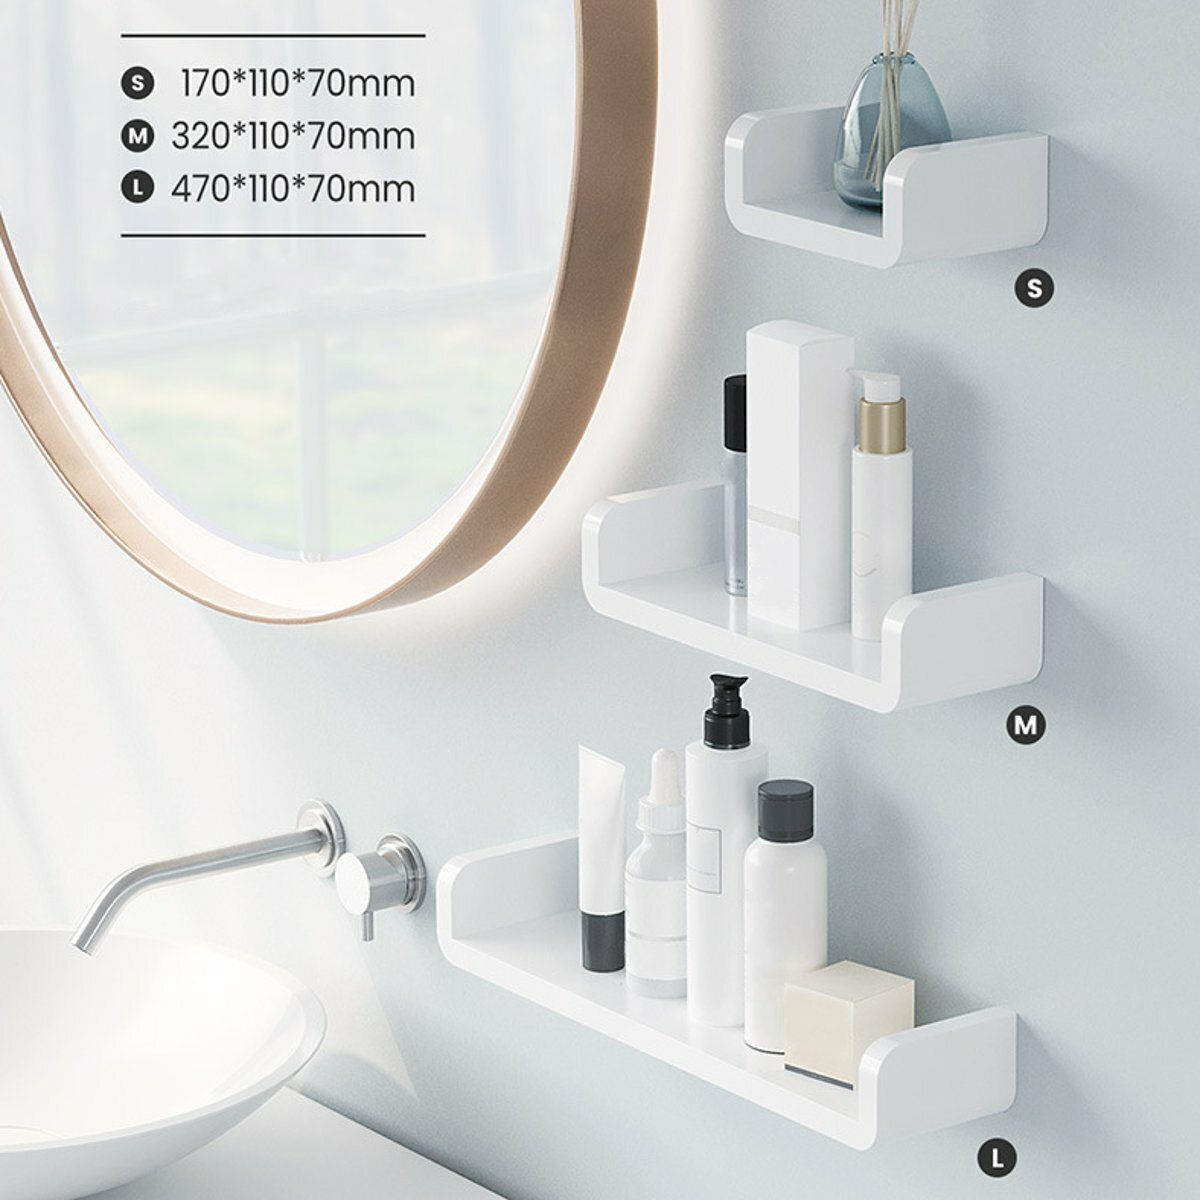 

Bakeey Storage Holder Waterproof Cosmetic Shelves Wall Hanging Bathroom Shower Shelf Caddy Shower Rack Kitchen Spice Rac